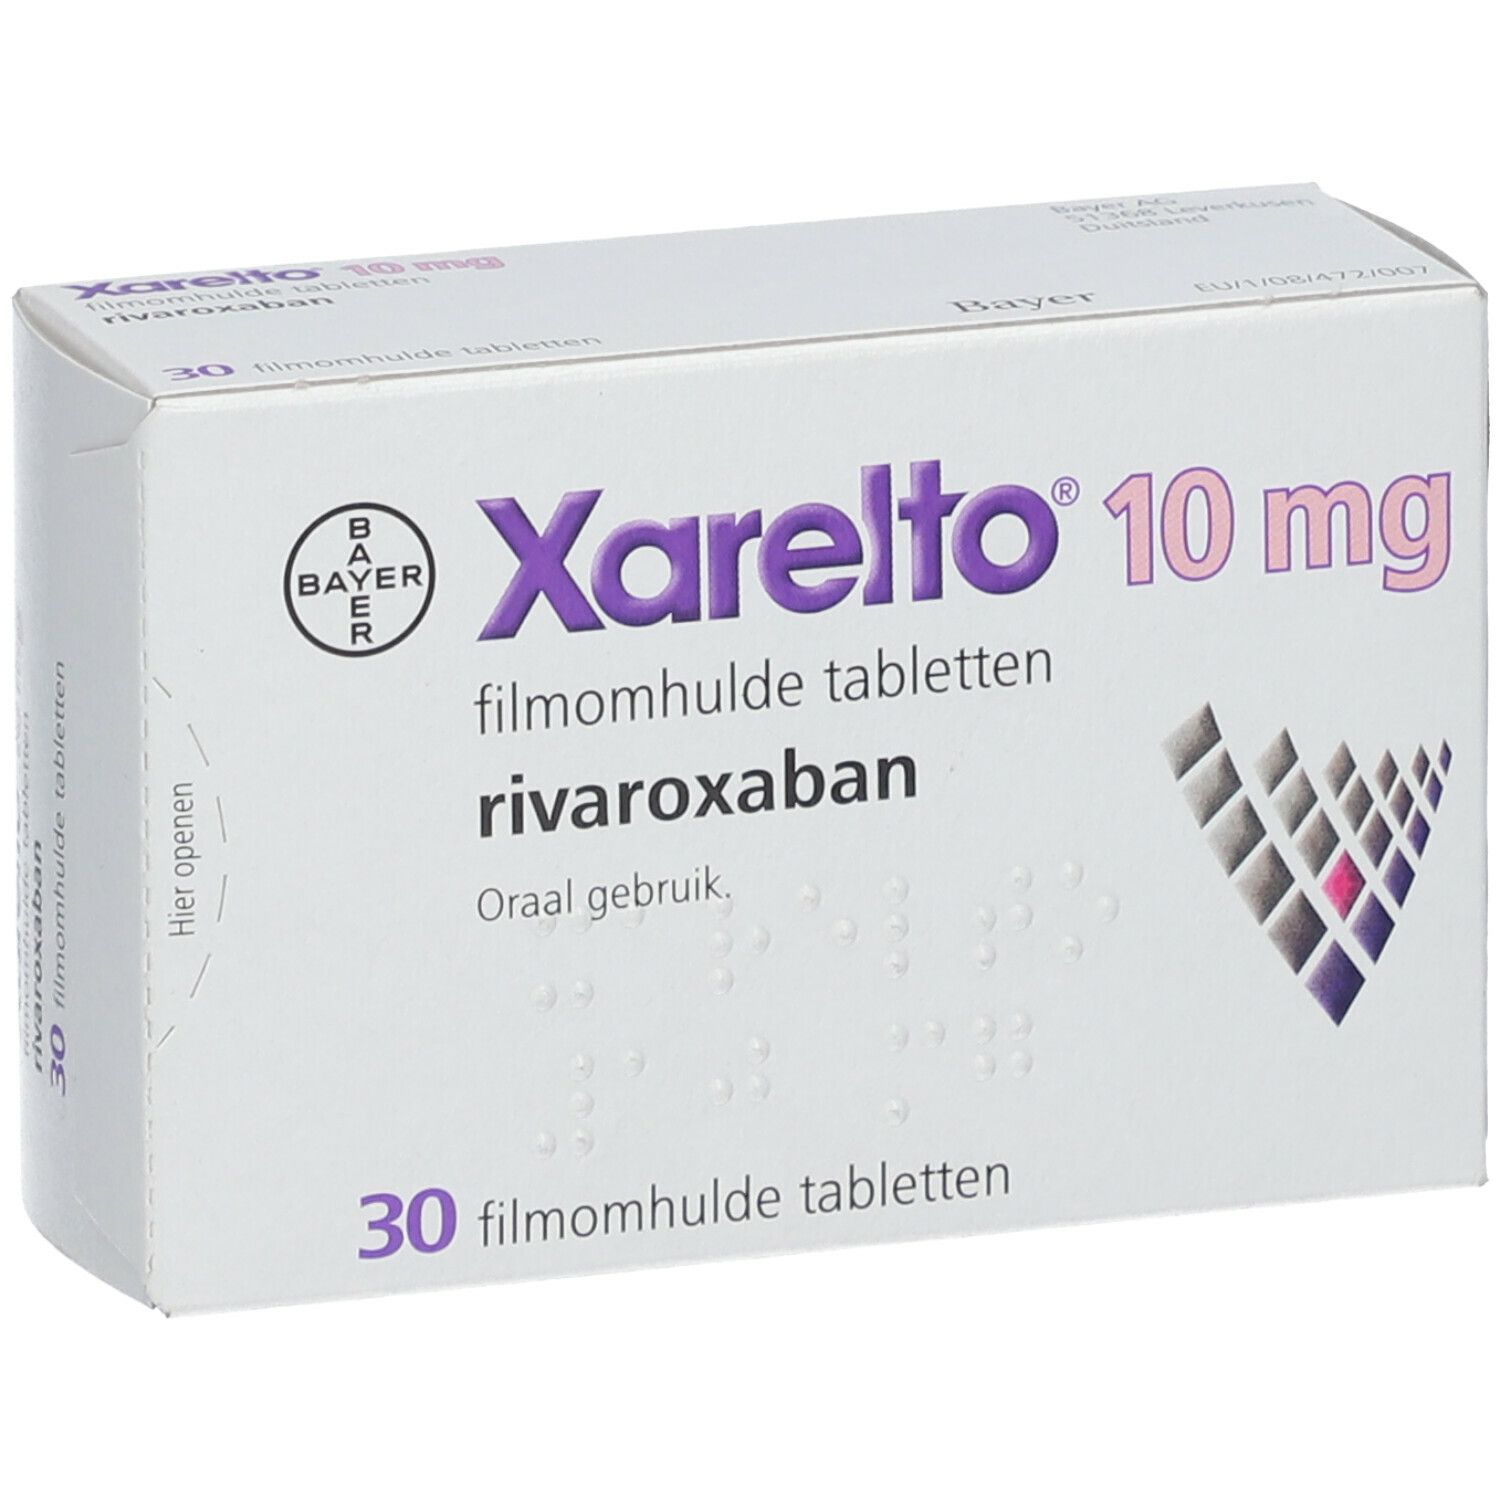 Xarelto 10 mg